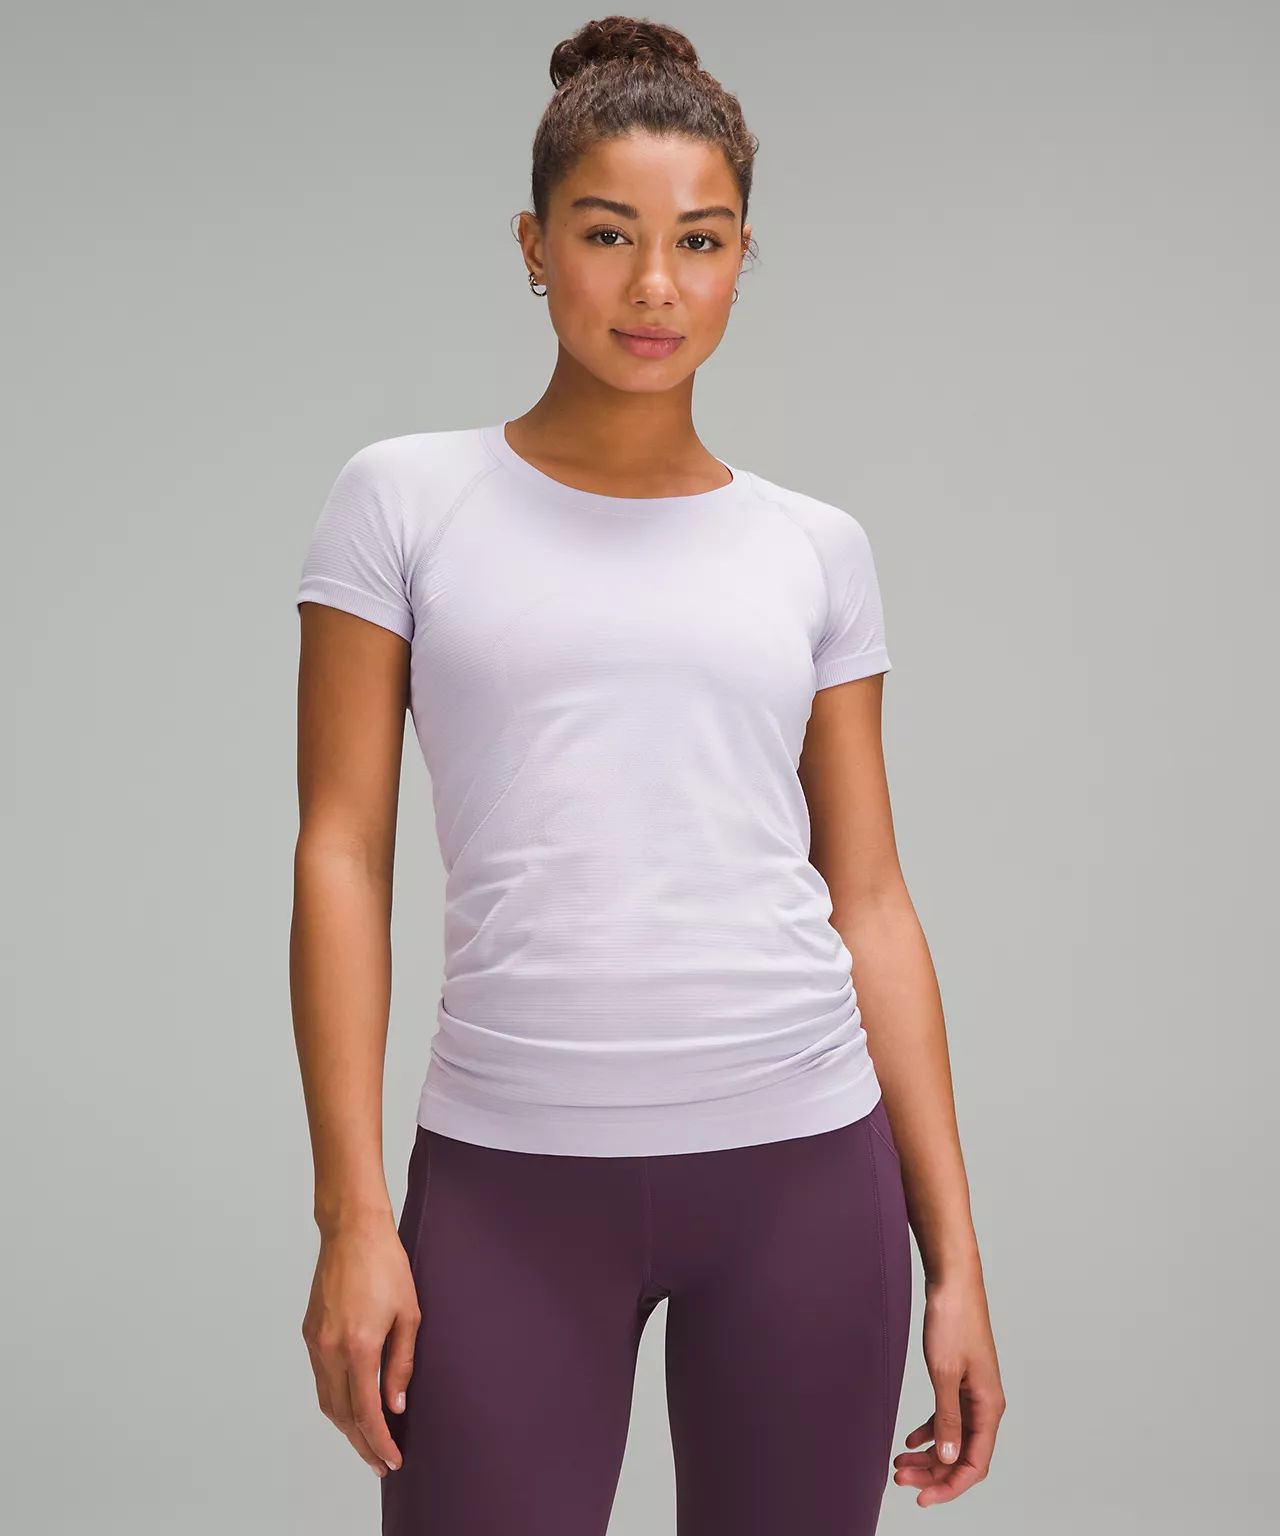 Swiftly Tech Short-Sleeve Shirt 2.0 | Lululemon (US)